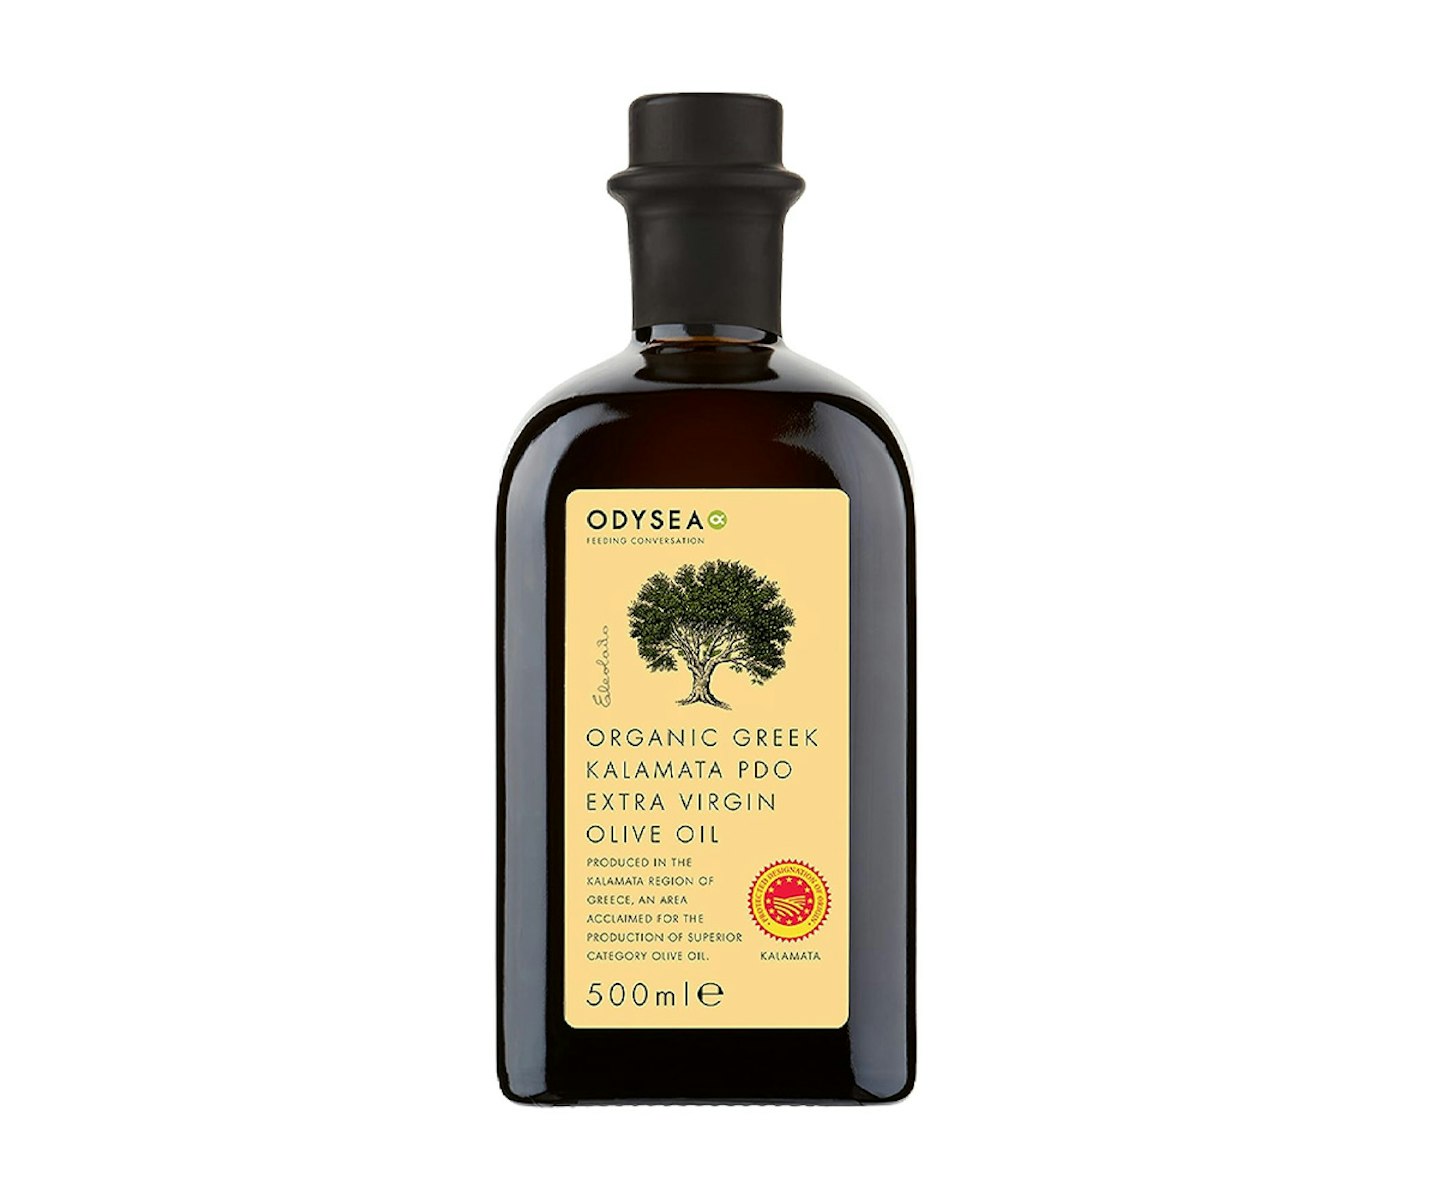 Odysea Organic Extra Virgin Olive Oil, PDO Kalamata EVOO, 500ml Glass Bottle